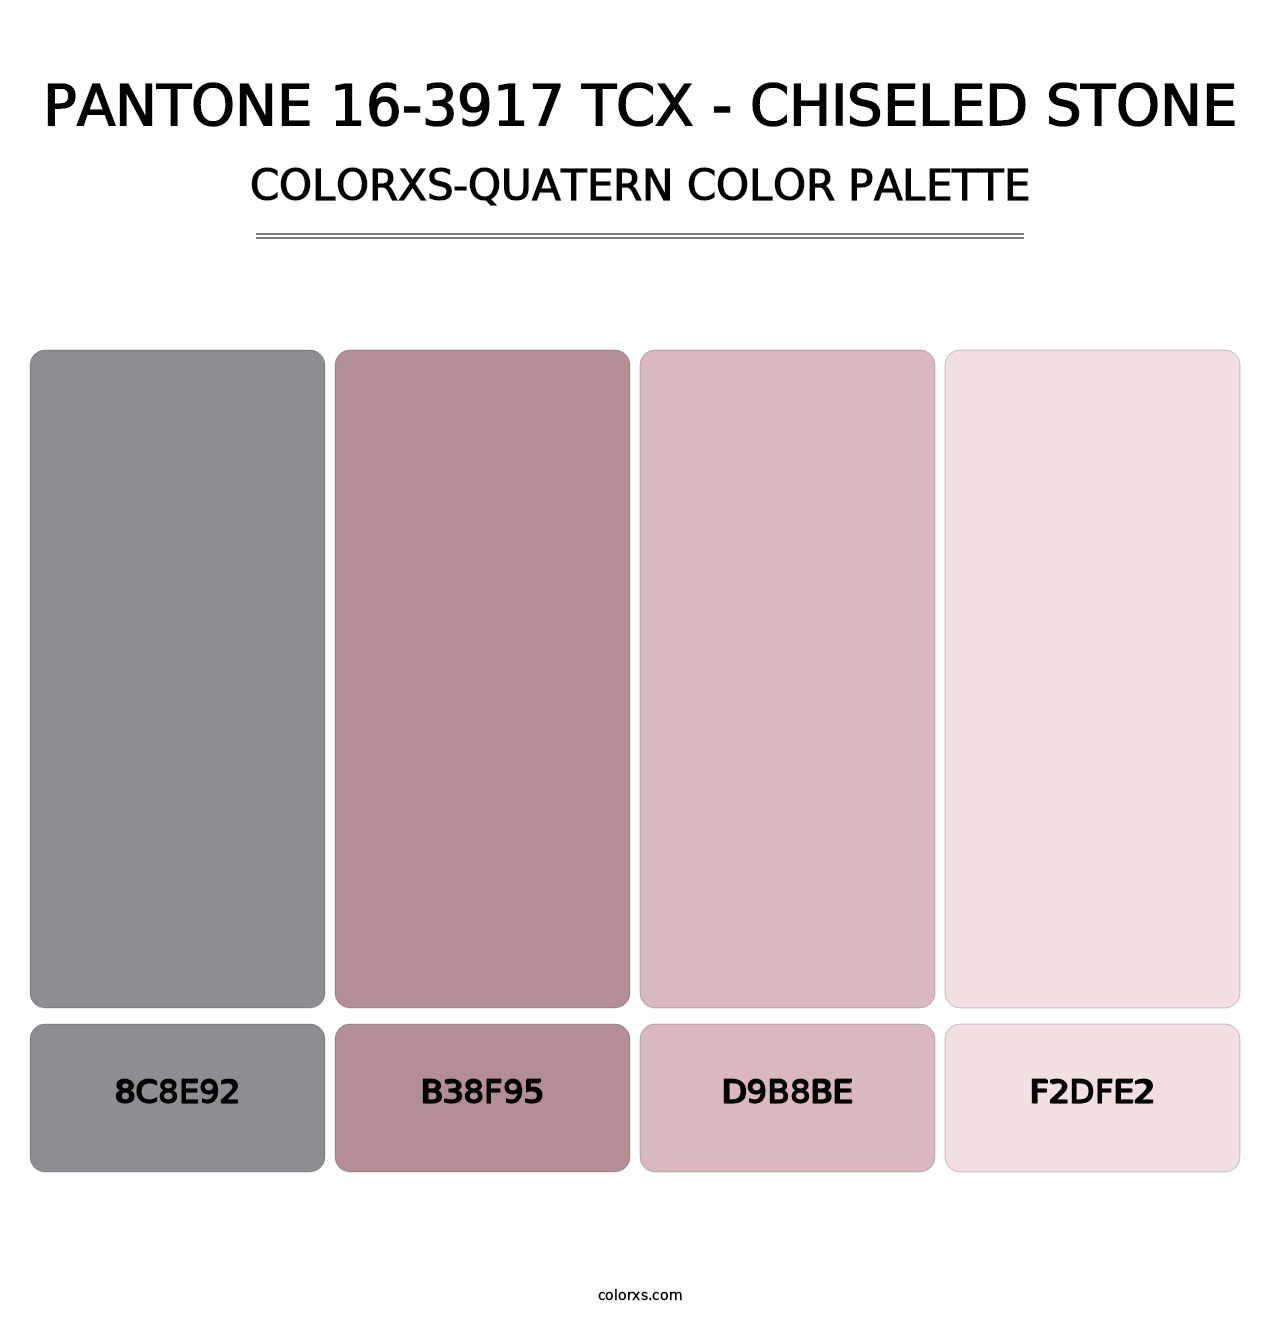 PANTONE 16-3917 TCX - Chiseled Stone - Colorxs Quatern Palette